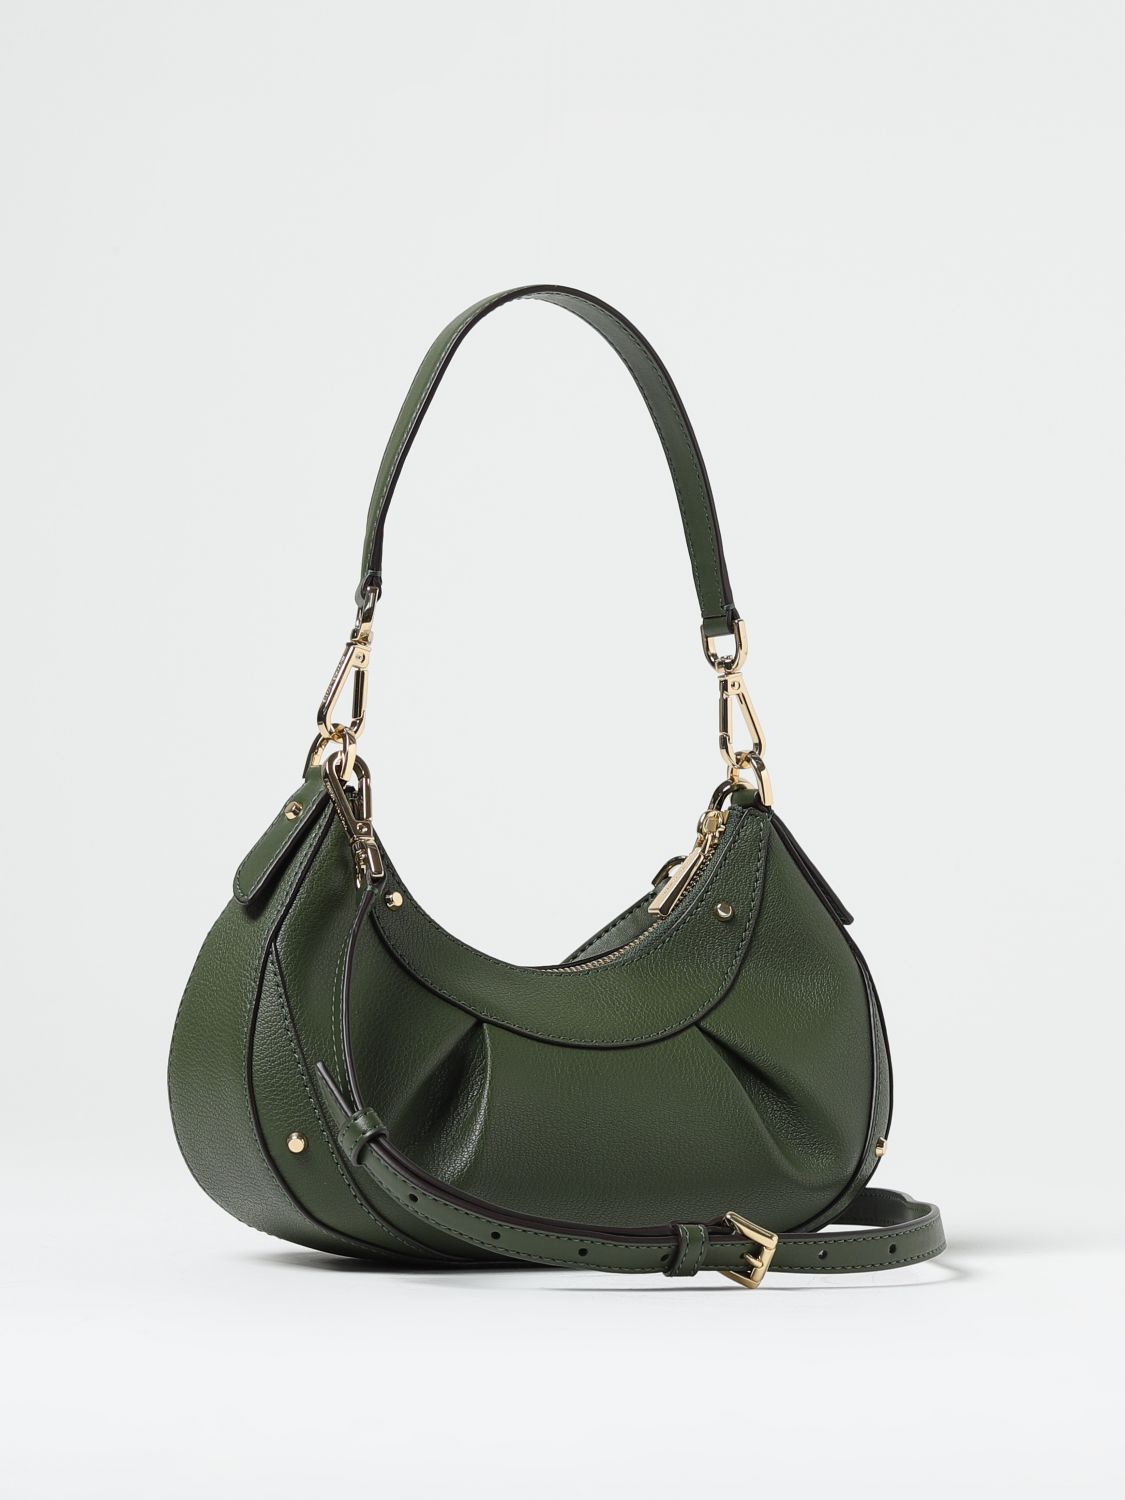 Ava Michael Kors Handbags for Women - Vestiaire Collective